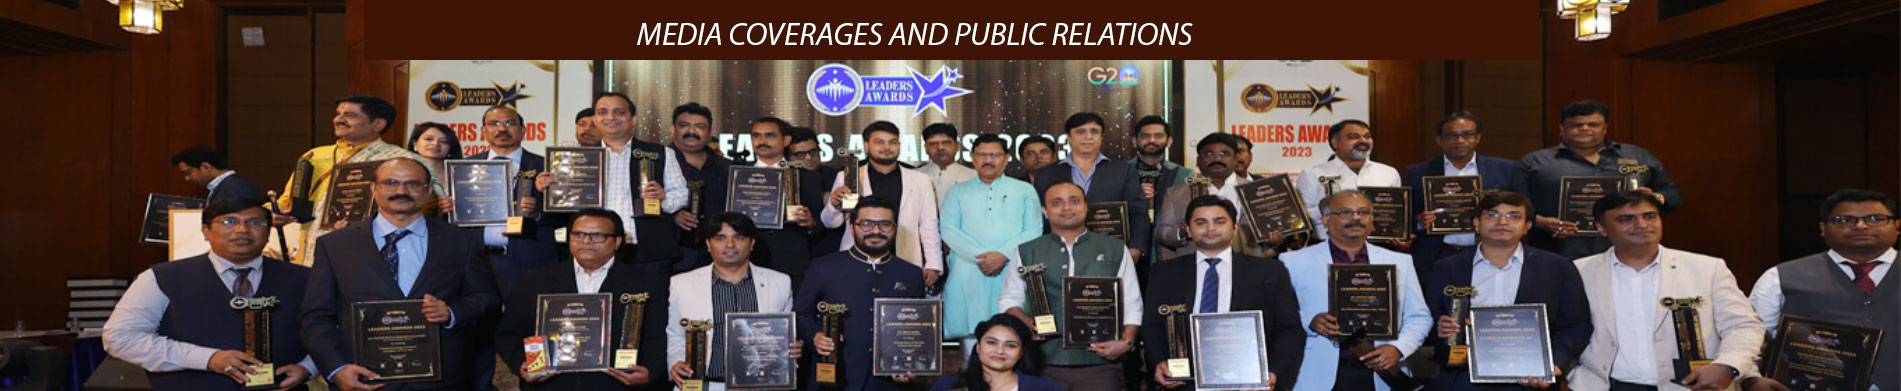 Vijay Malhotra's PR and Media Achievements - Recognitions in Branding, Marketing, Digital, and PR